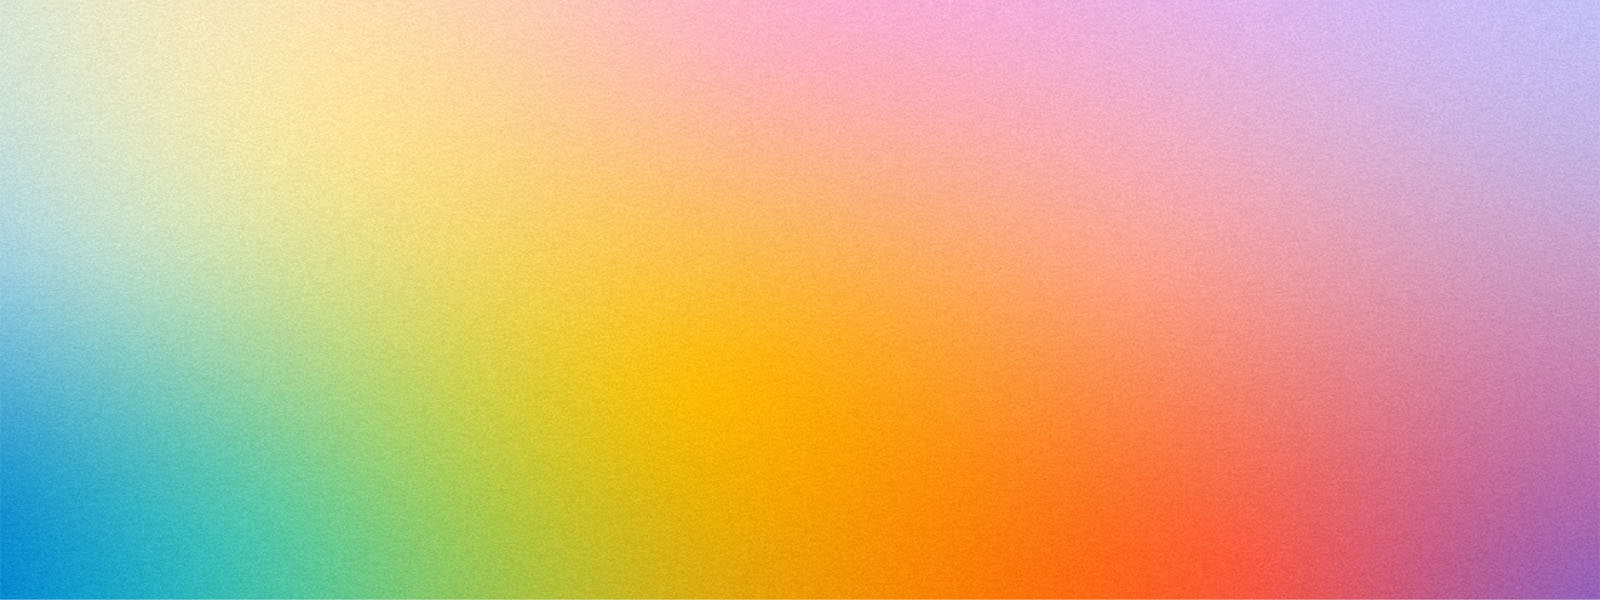 Developer Experience Lab - rainbow background